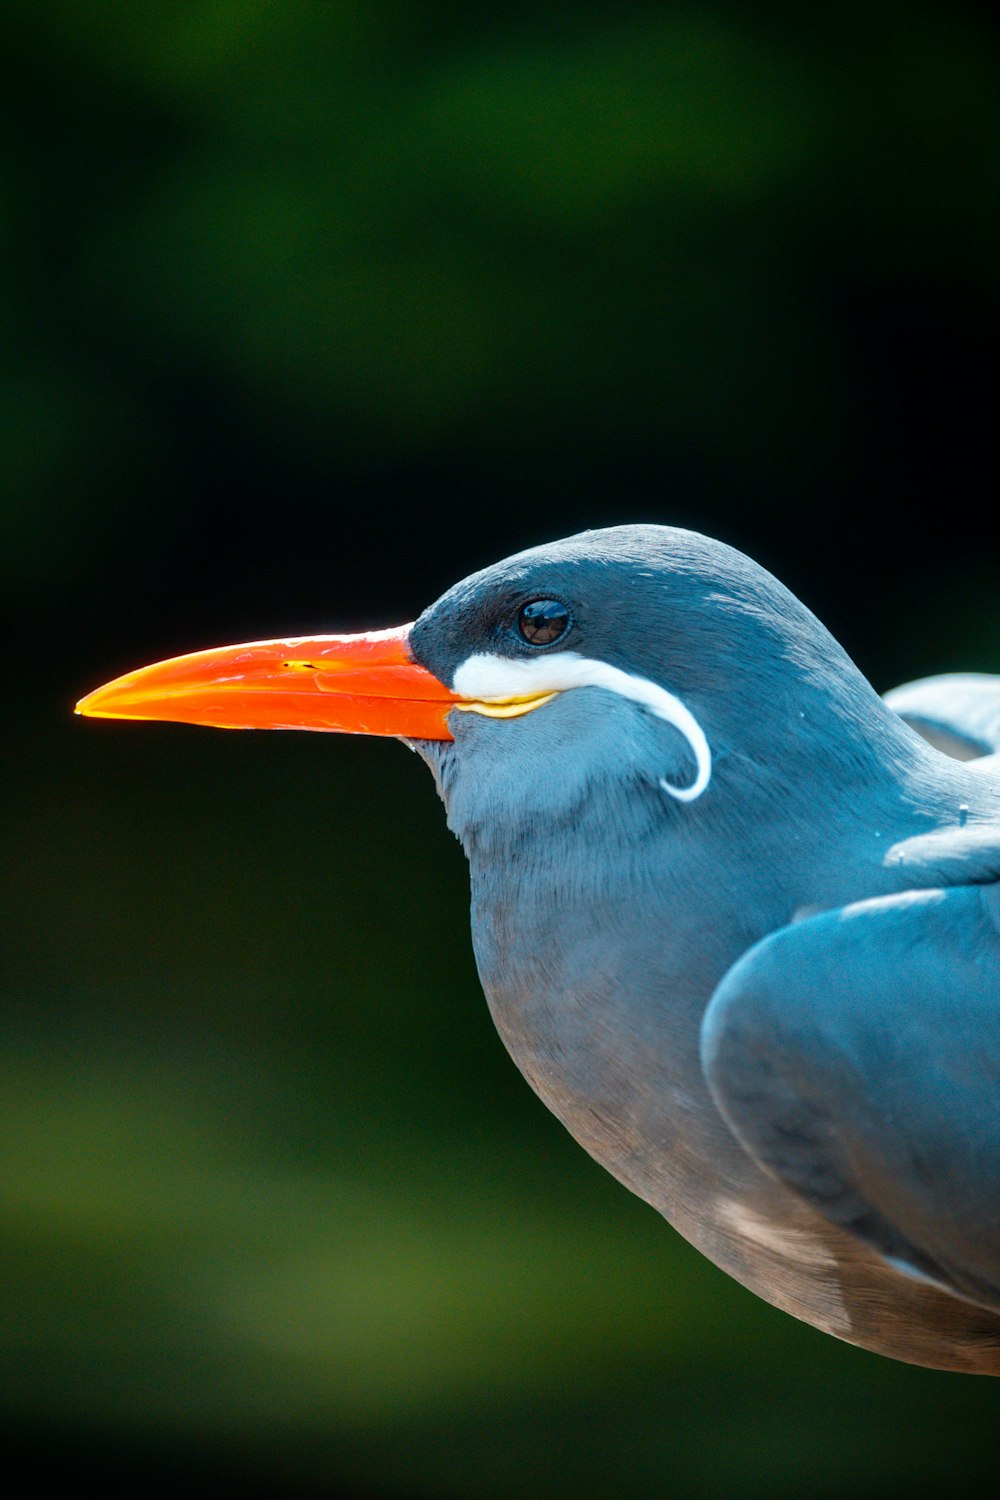 a close up of a bird with an orange beak